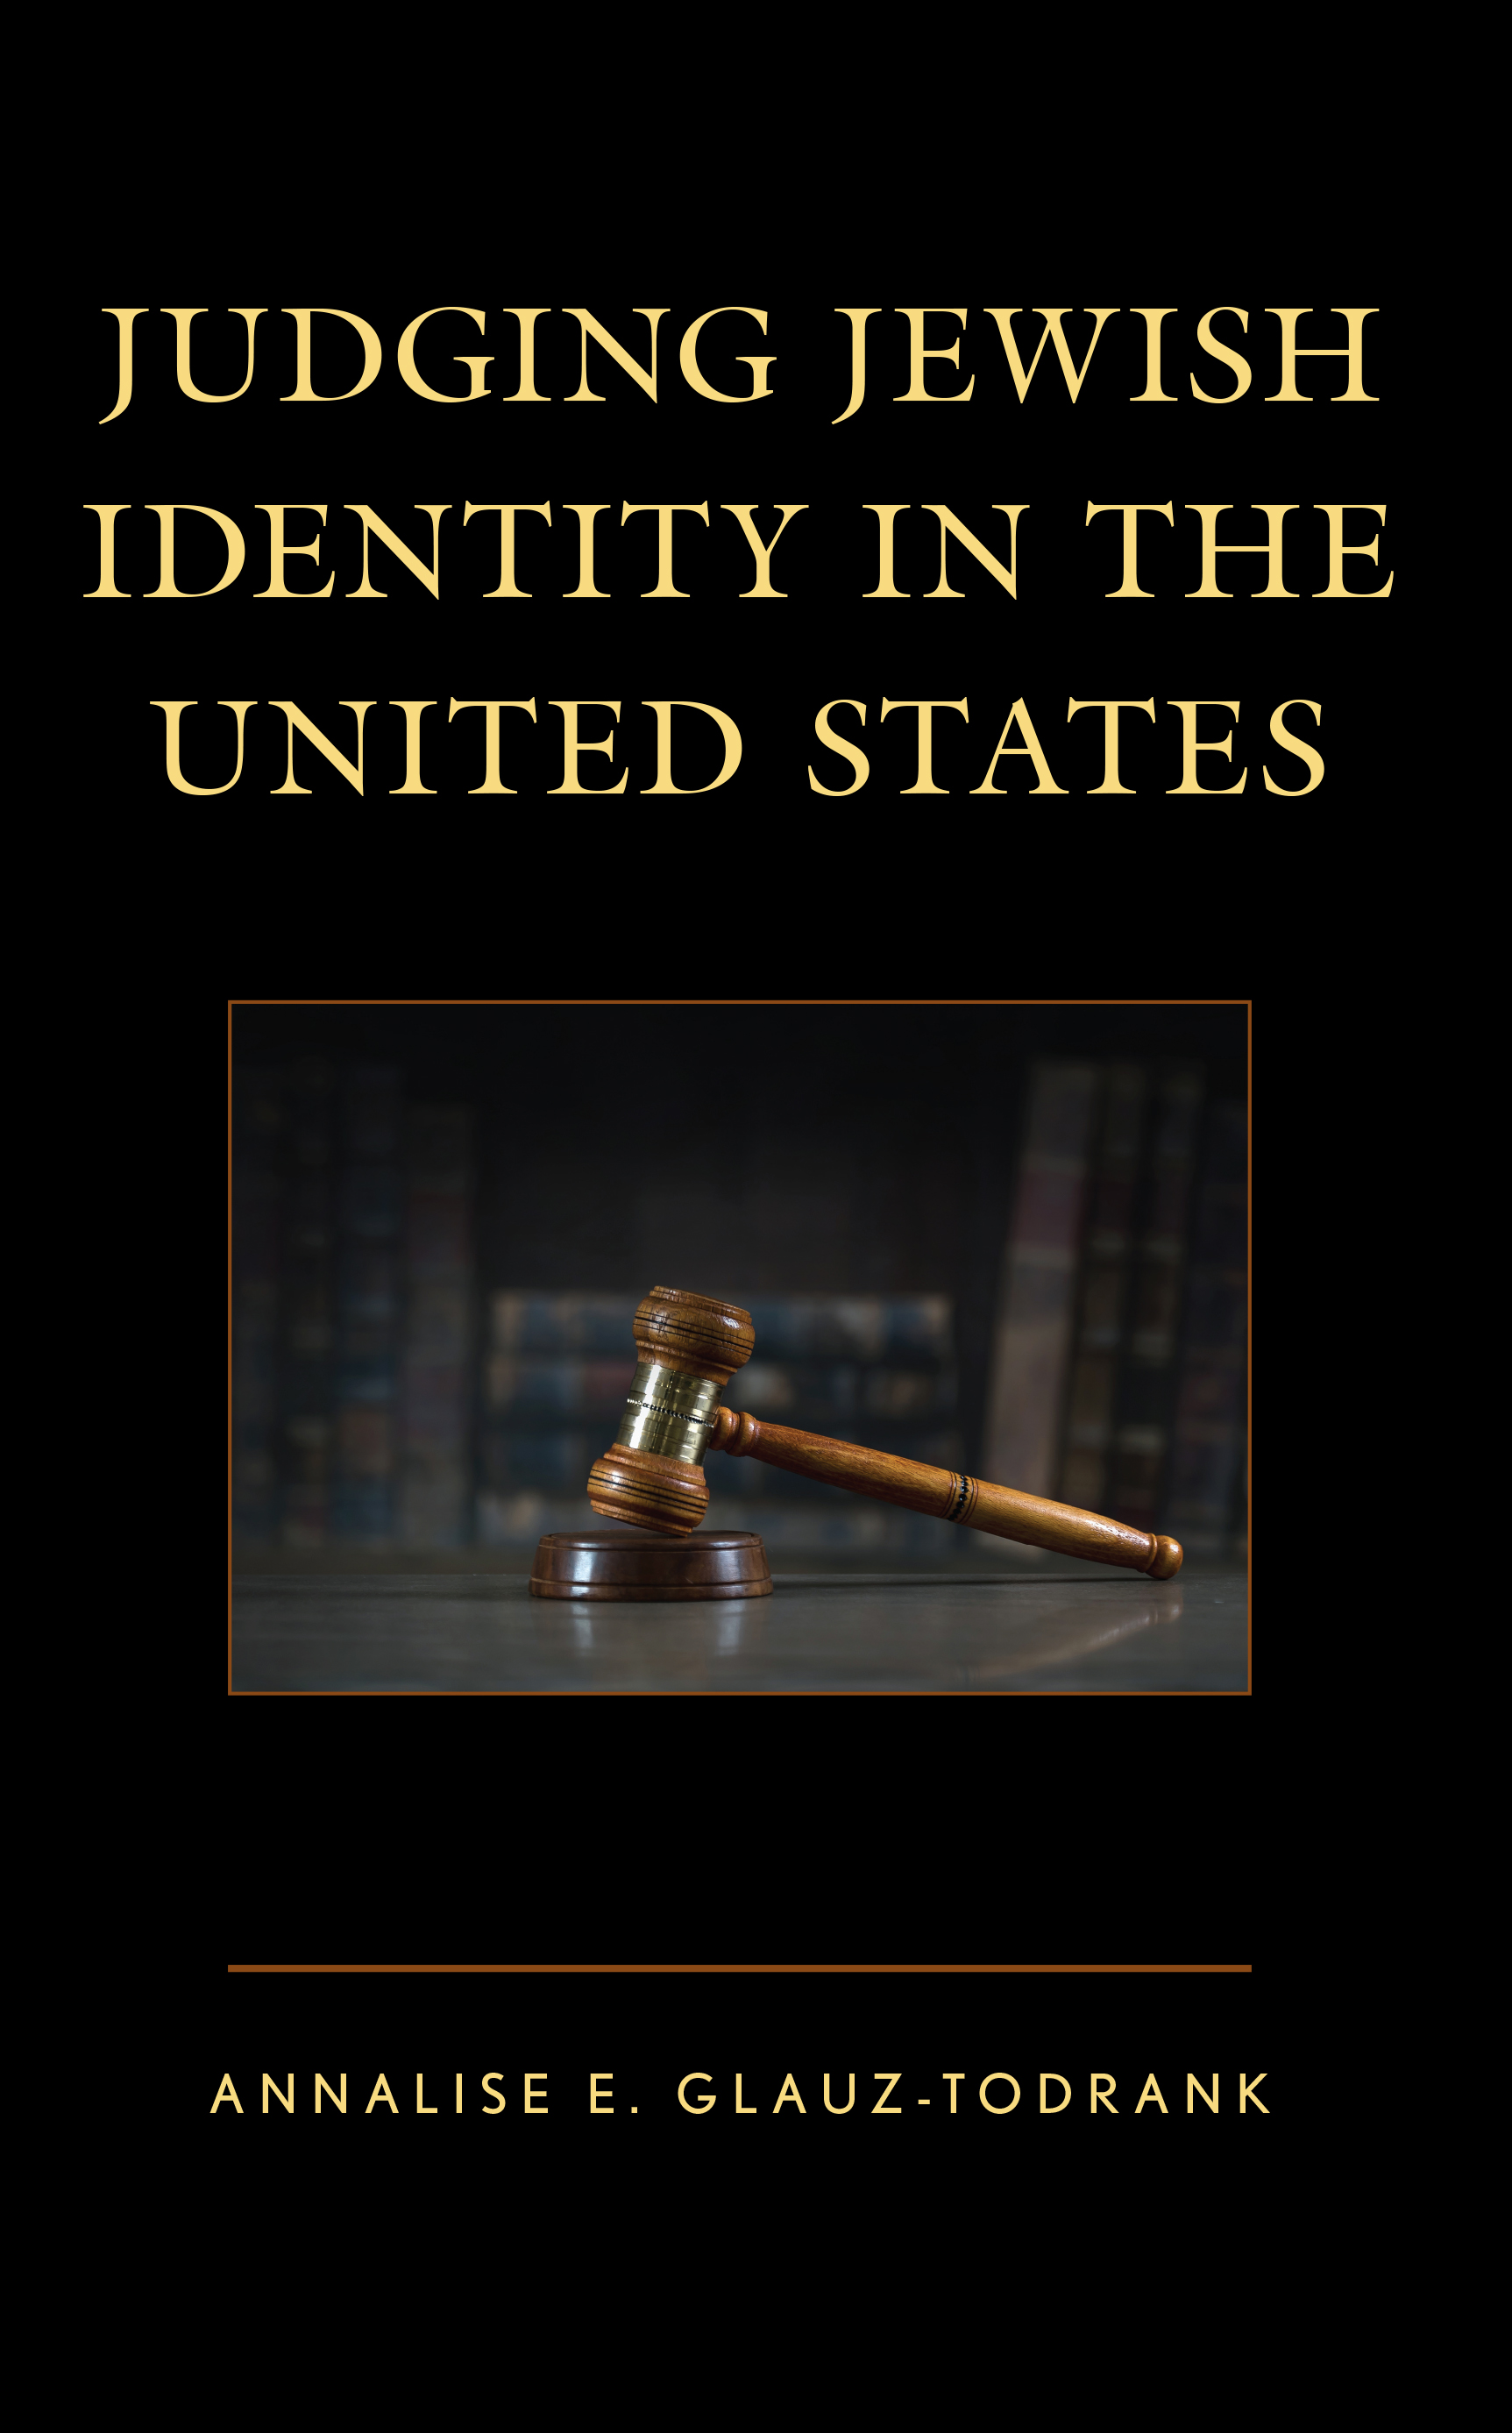 Judging Jewish Identity in the United States